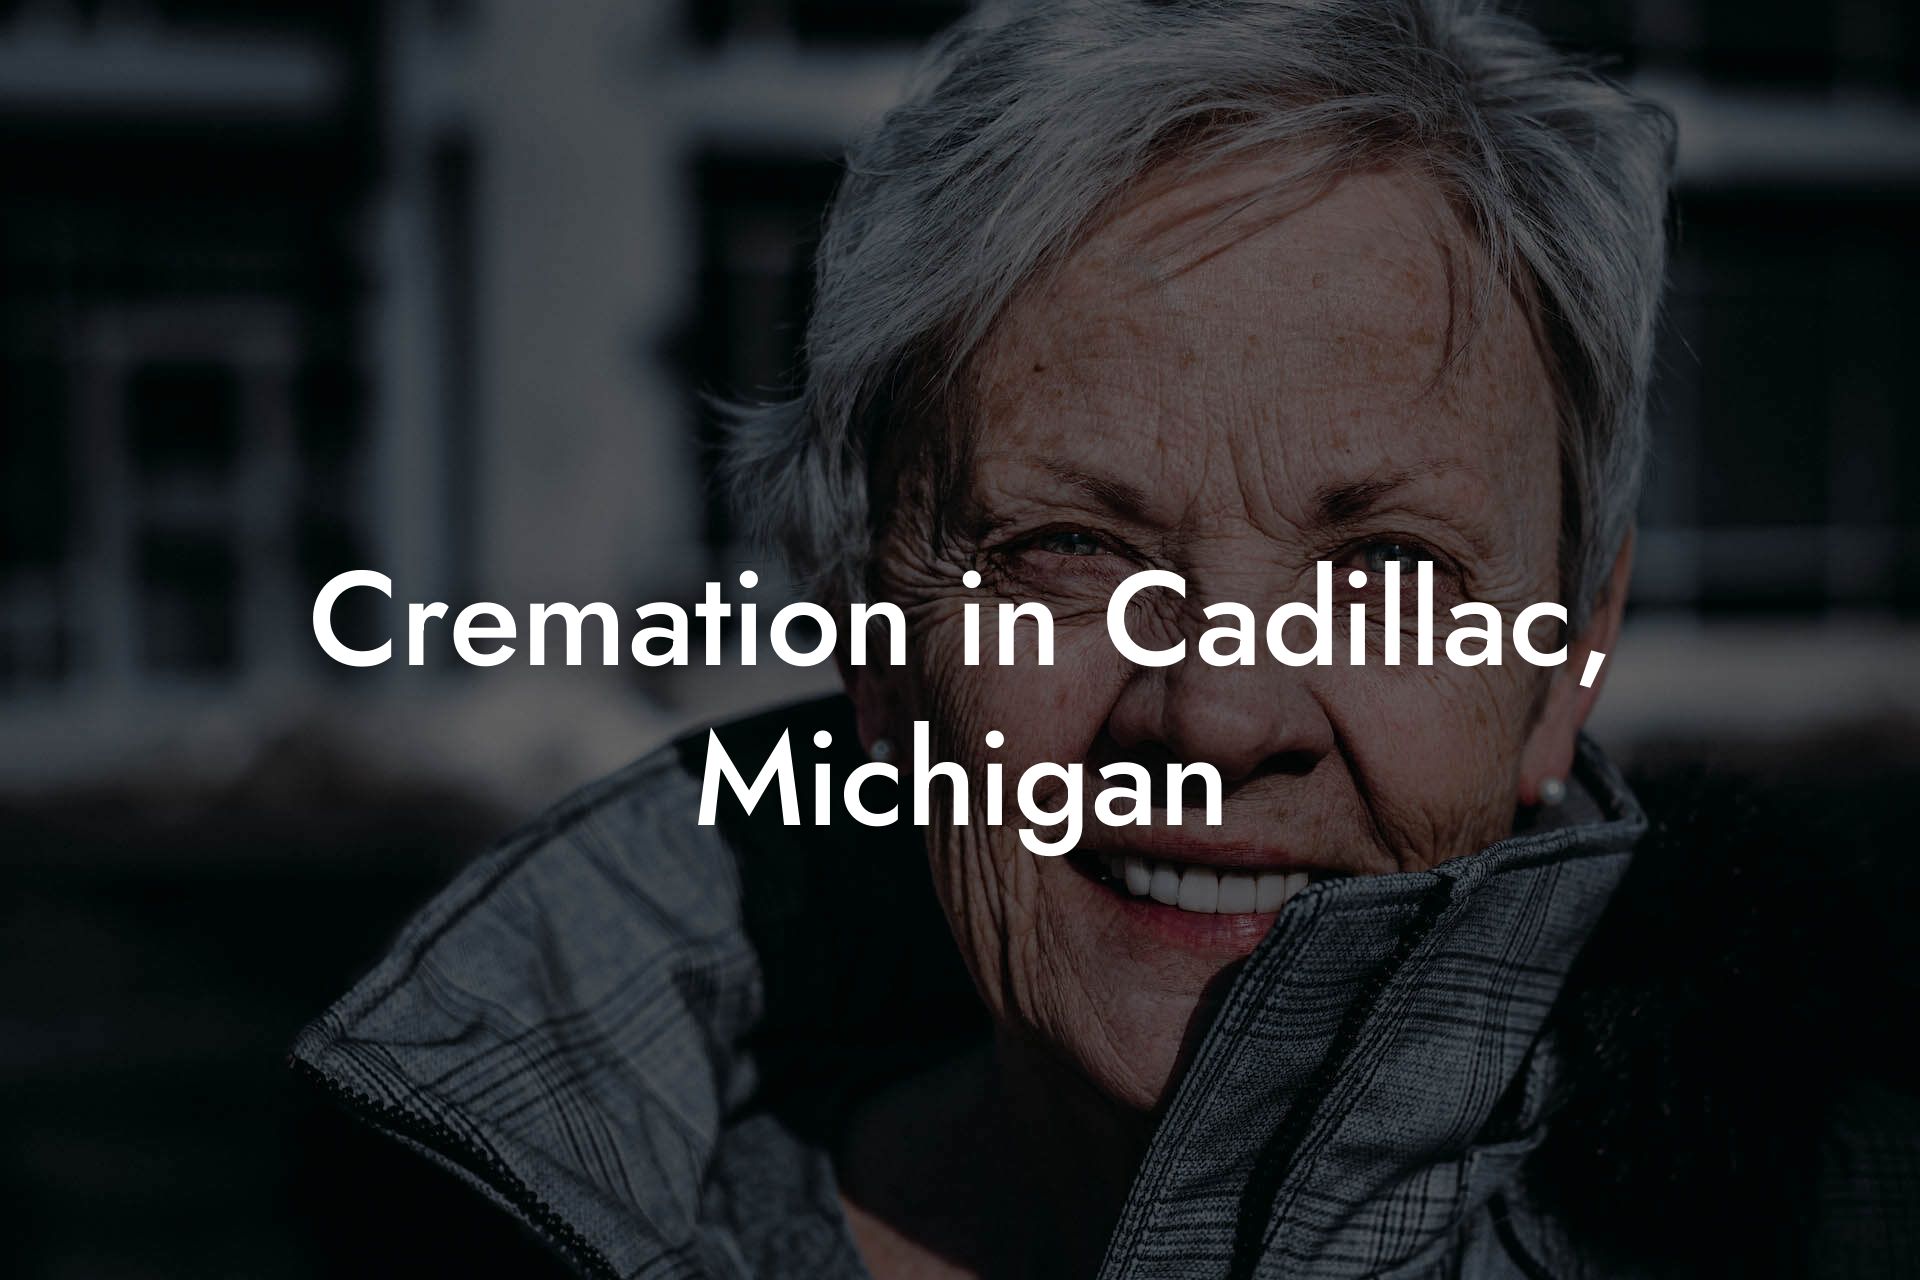 Cremation in Cadillac, Michigan